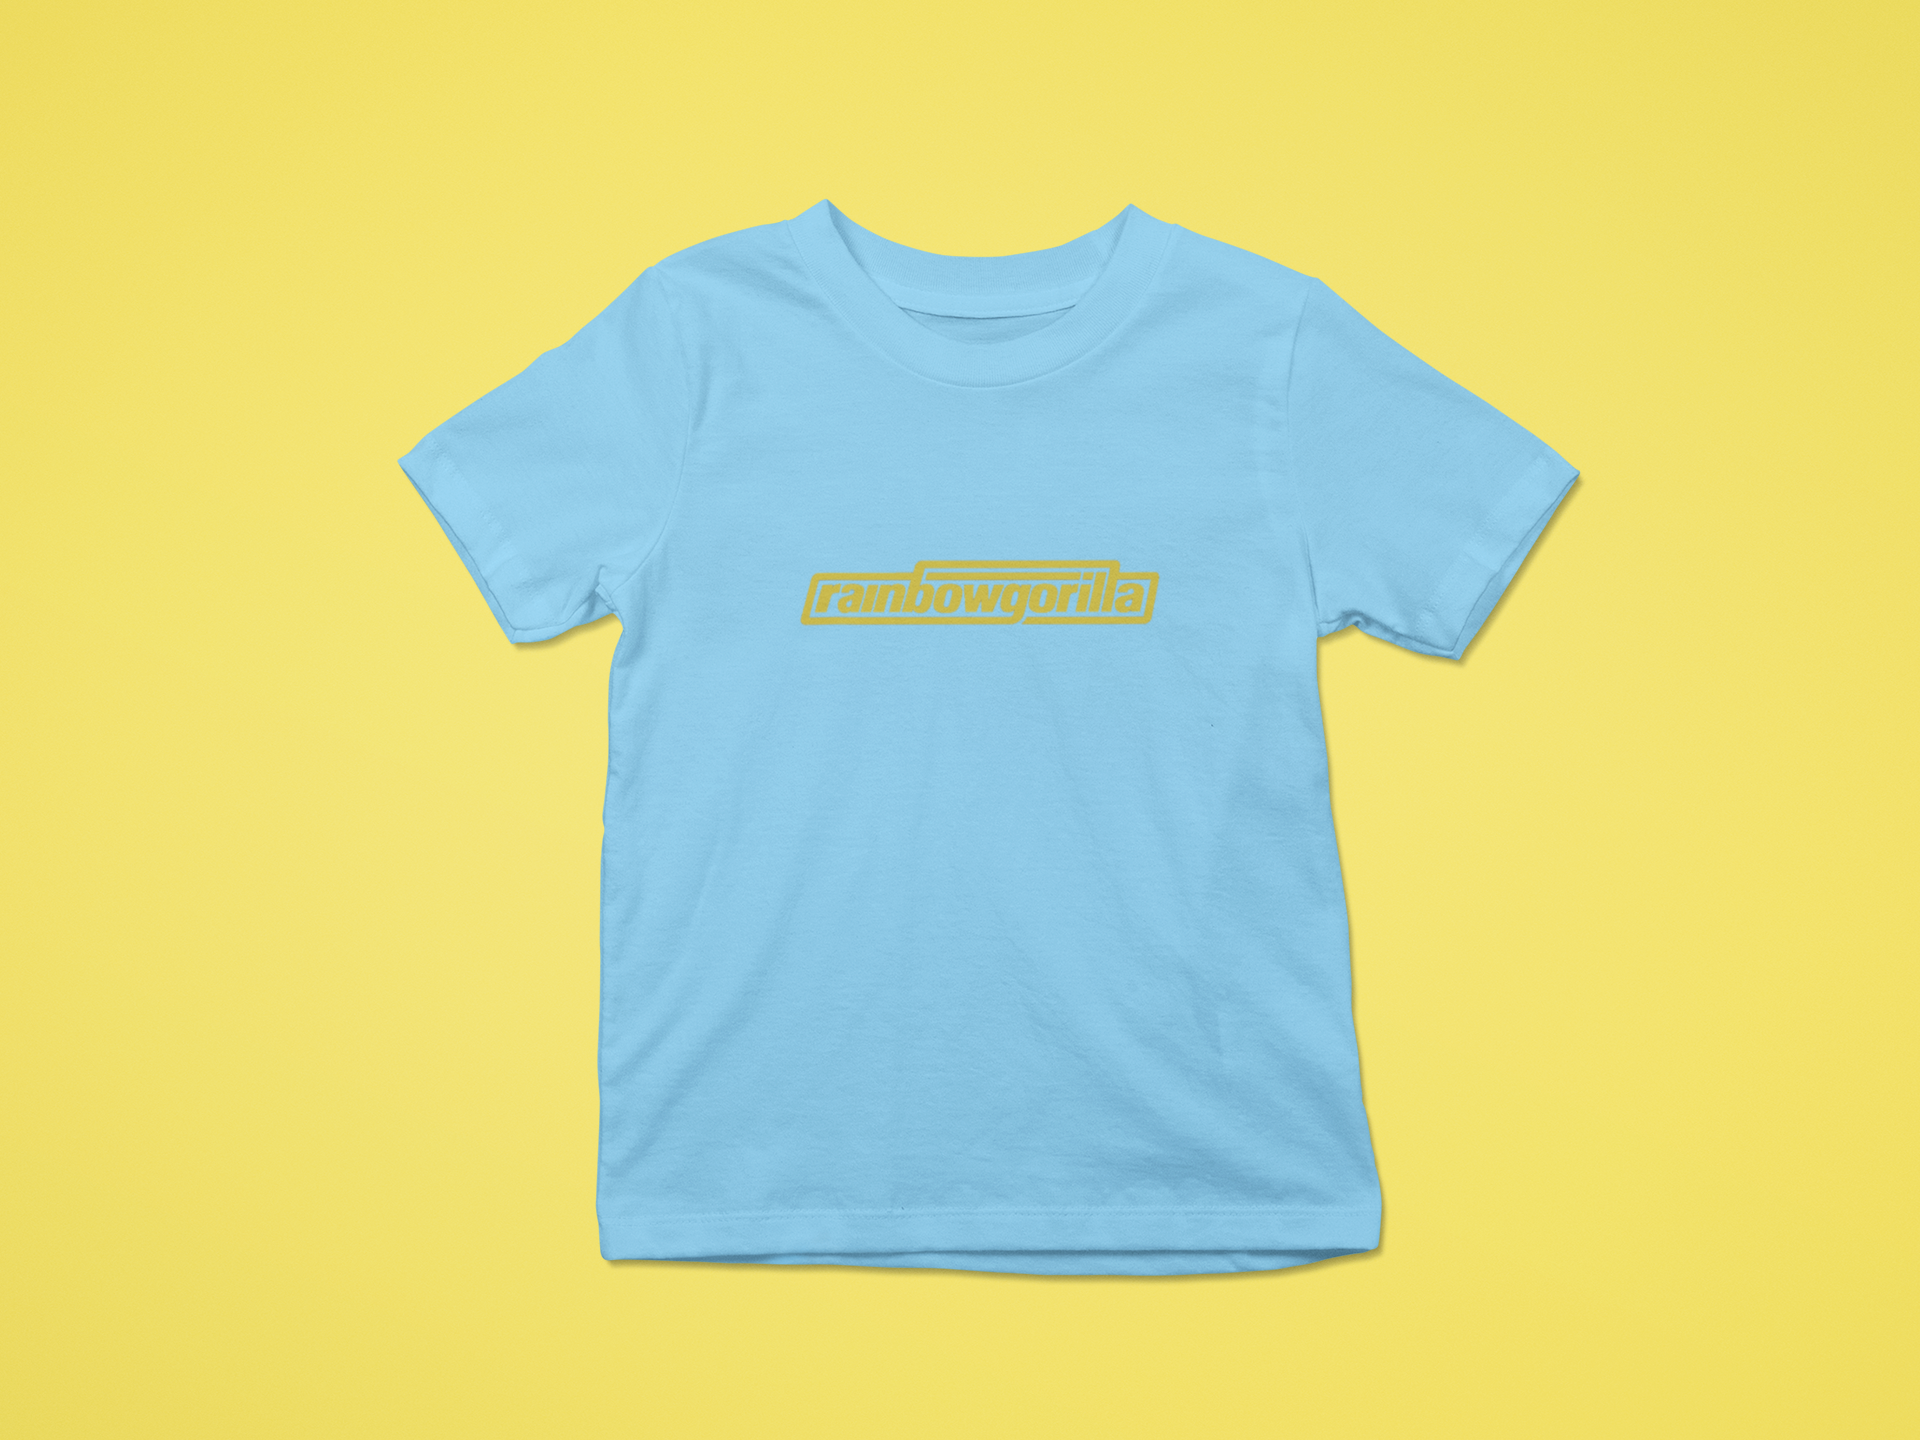 Rainbow Gorilla ´RG Tekst Goud´ T-shirt Kids